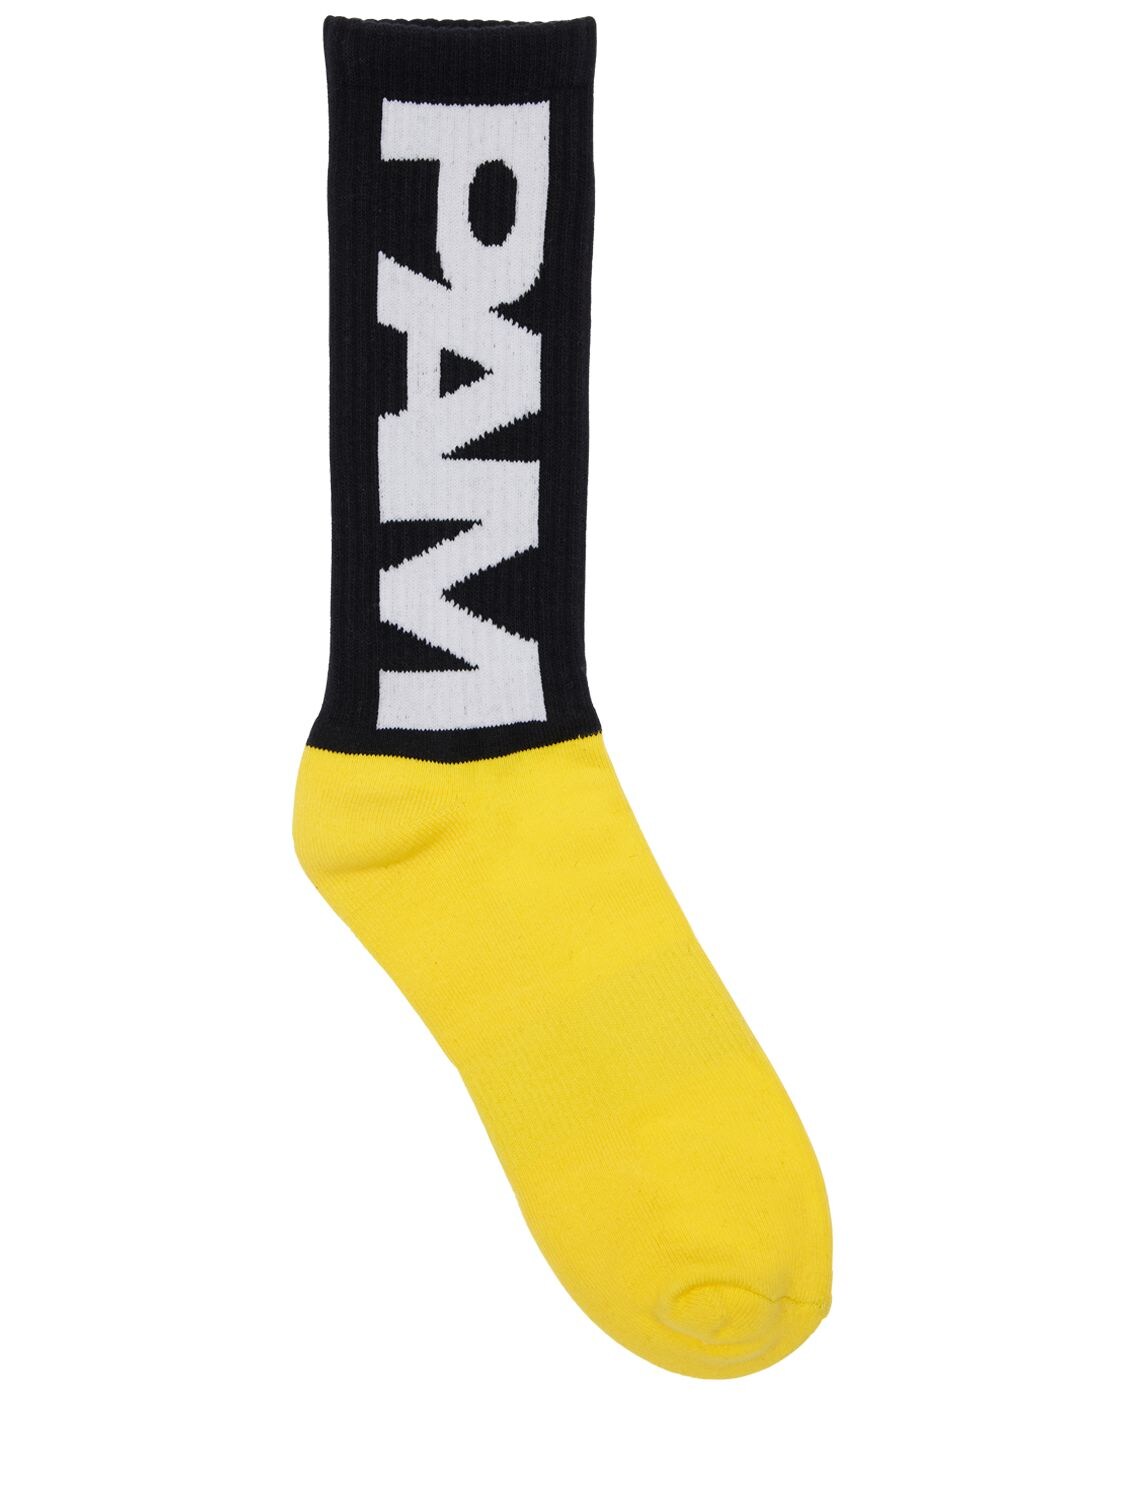 Pam - Perks And Mini Pam Btc Unisex Cotton Blend Socks In Black,yellow